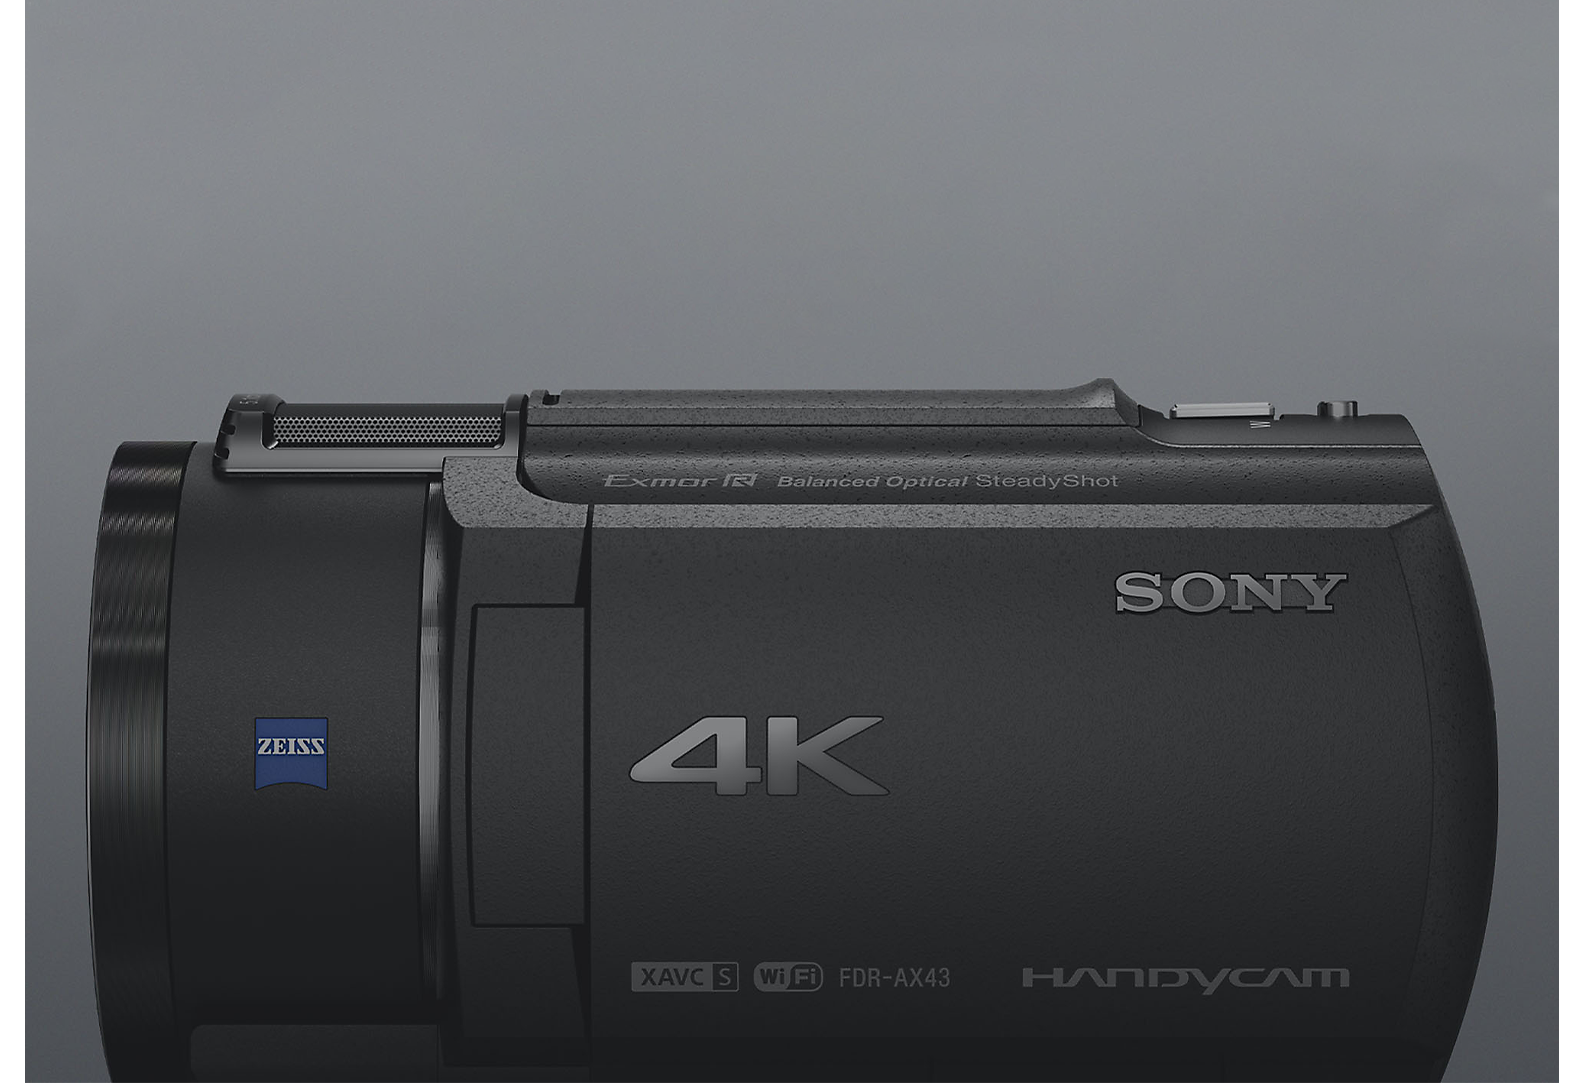 Prikaz bočne strane Sonyjevog 4K Handycam kamkordera